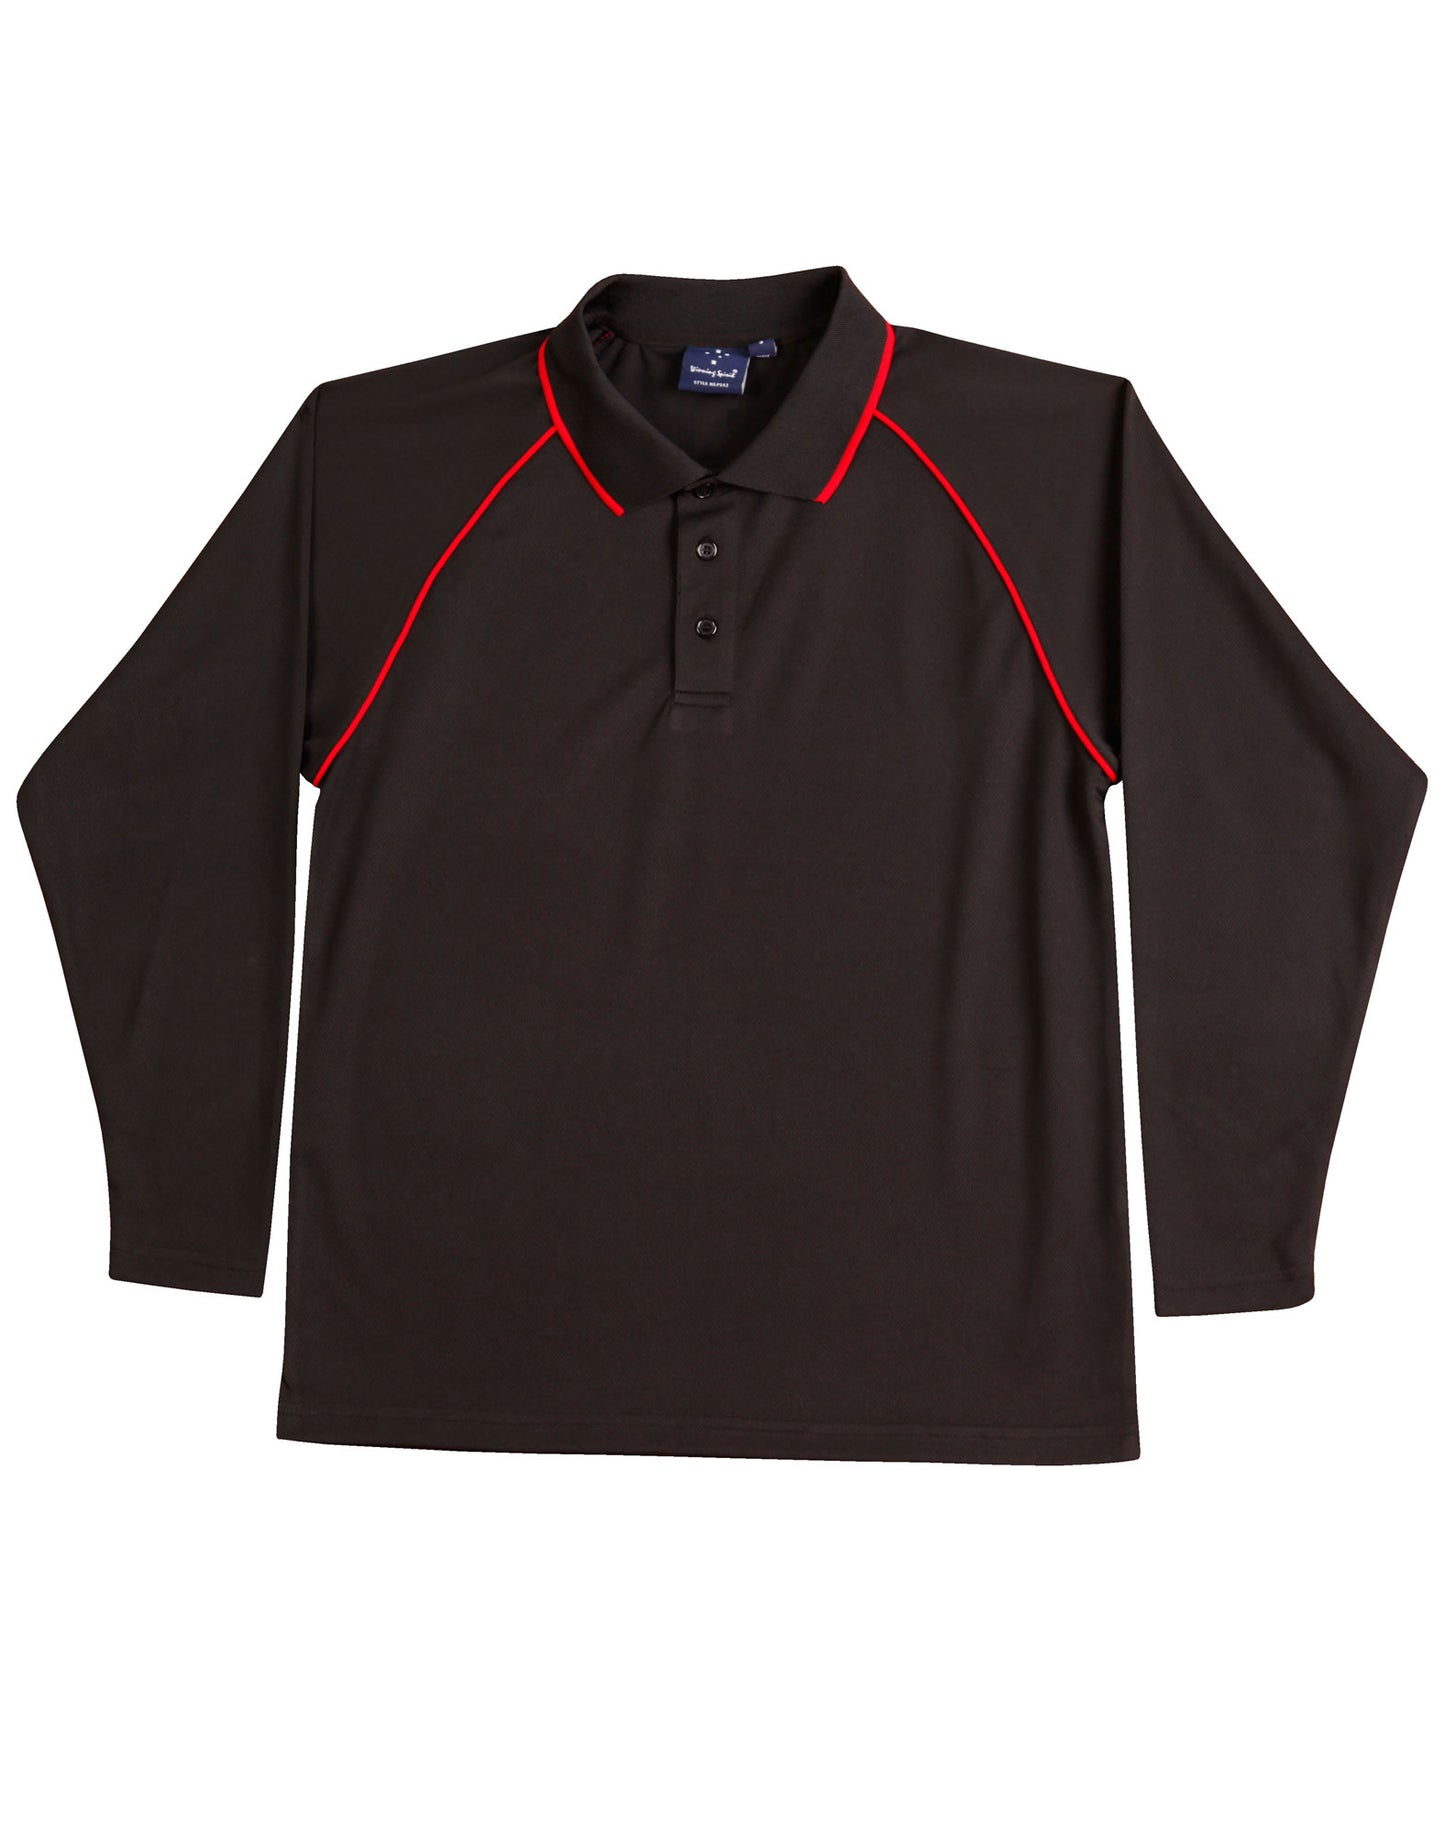 Winning Spirit -Men's CoolDry® Raglan Long Sleeve Contrast Polo-PS43